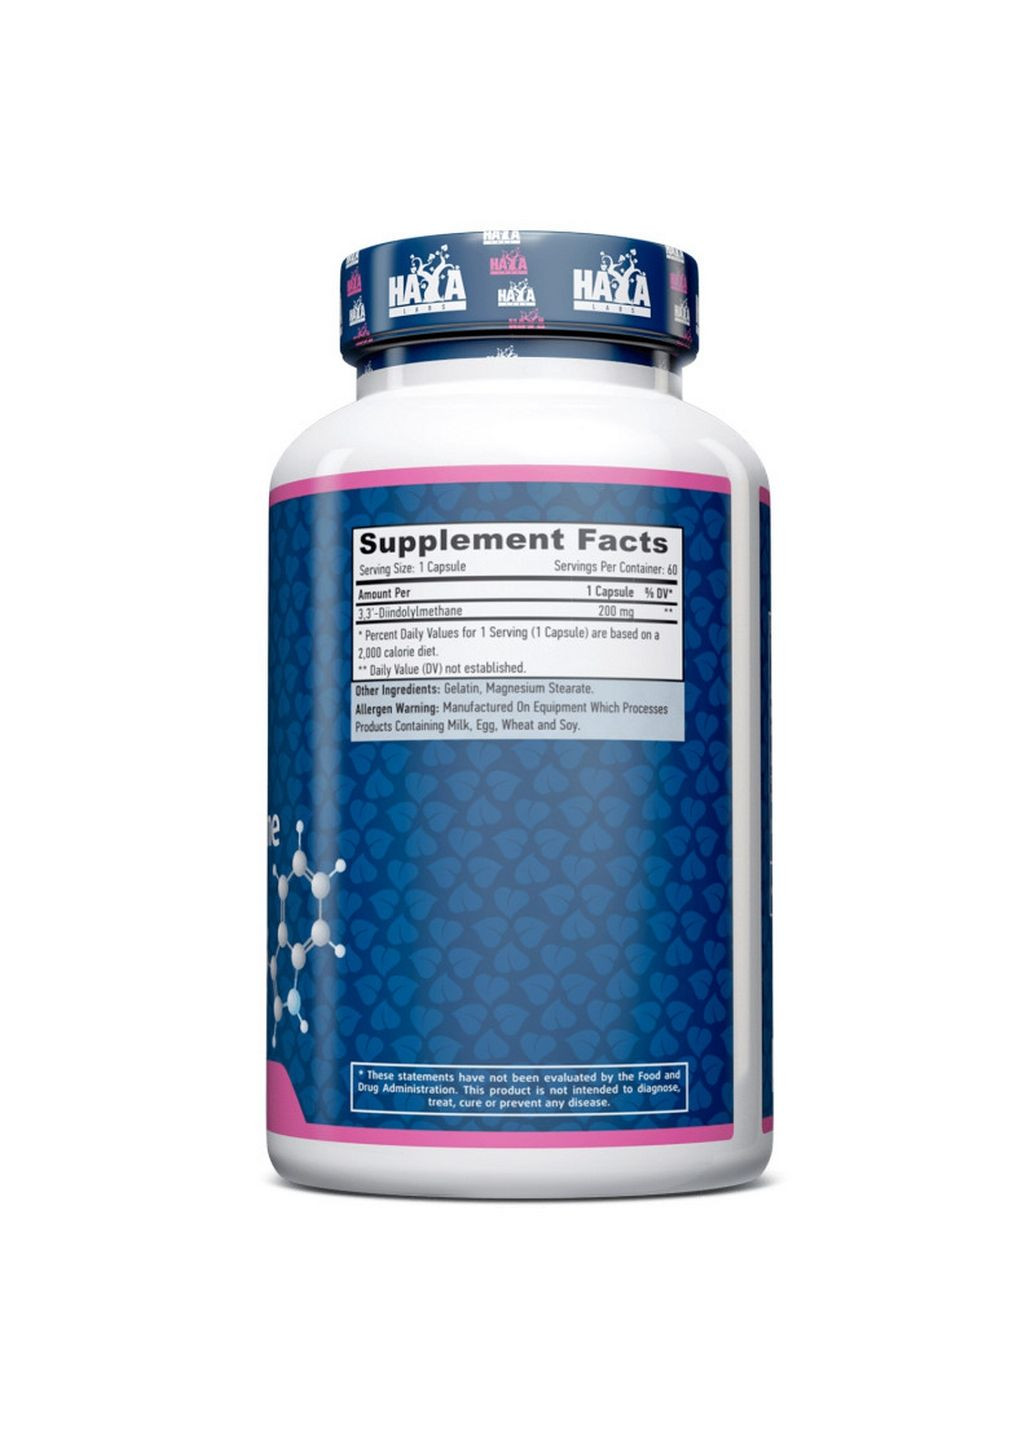 Натуральная добавка DIM 200 mg, 60 капсул Haya Labs (293481733)